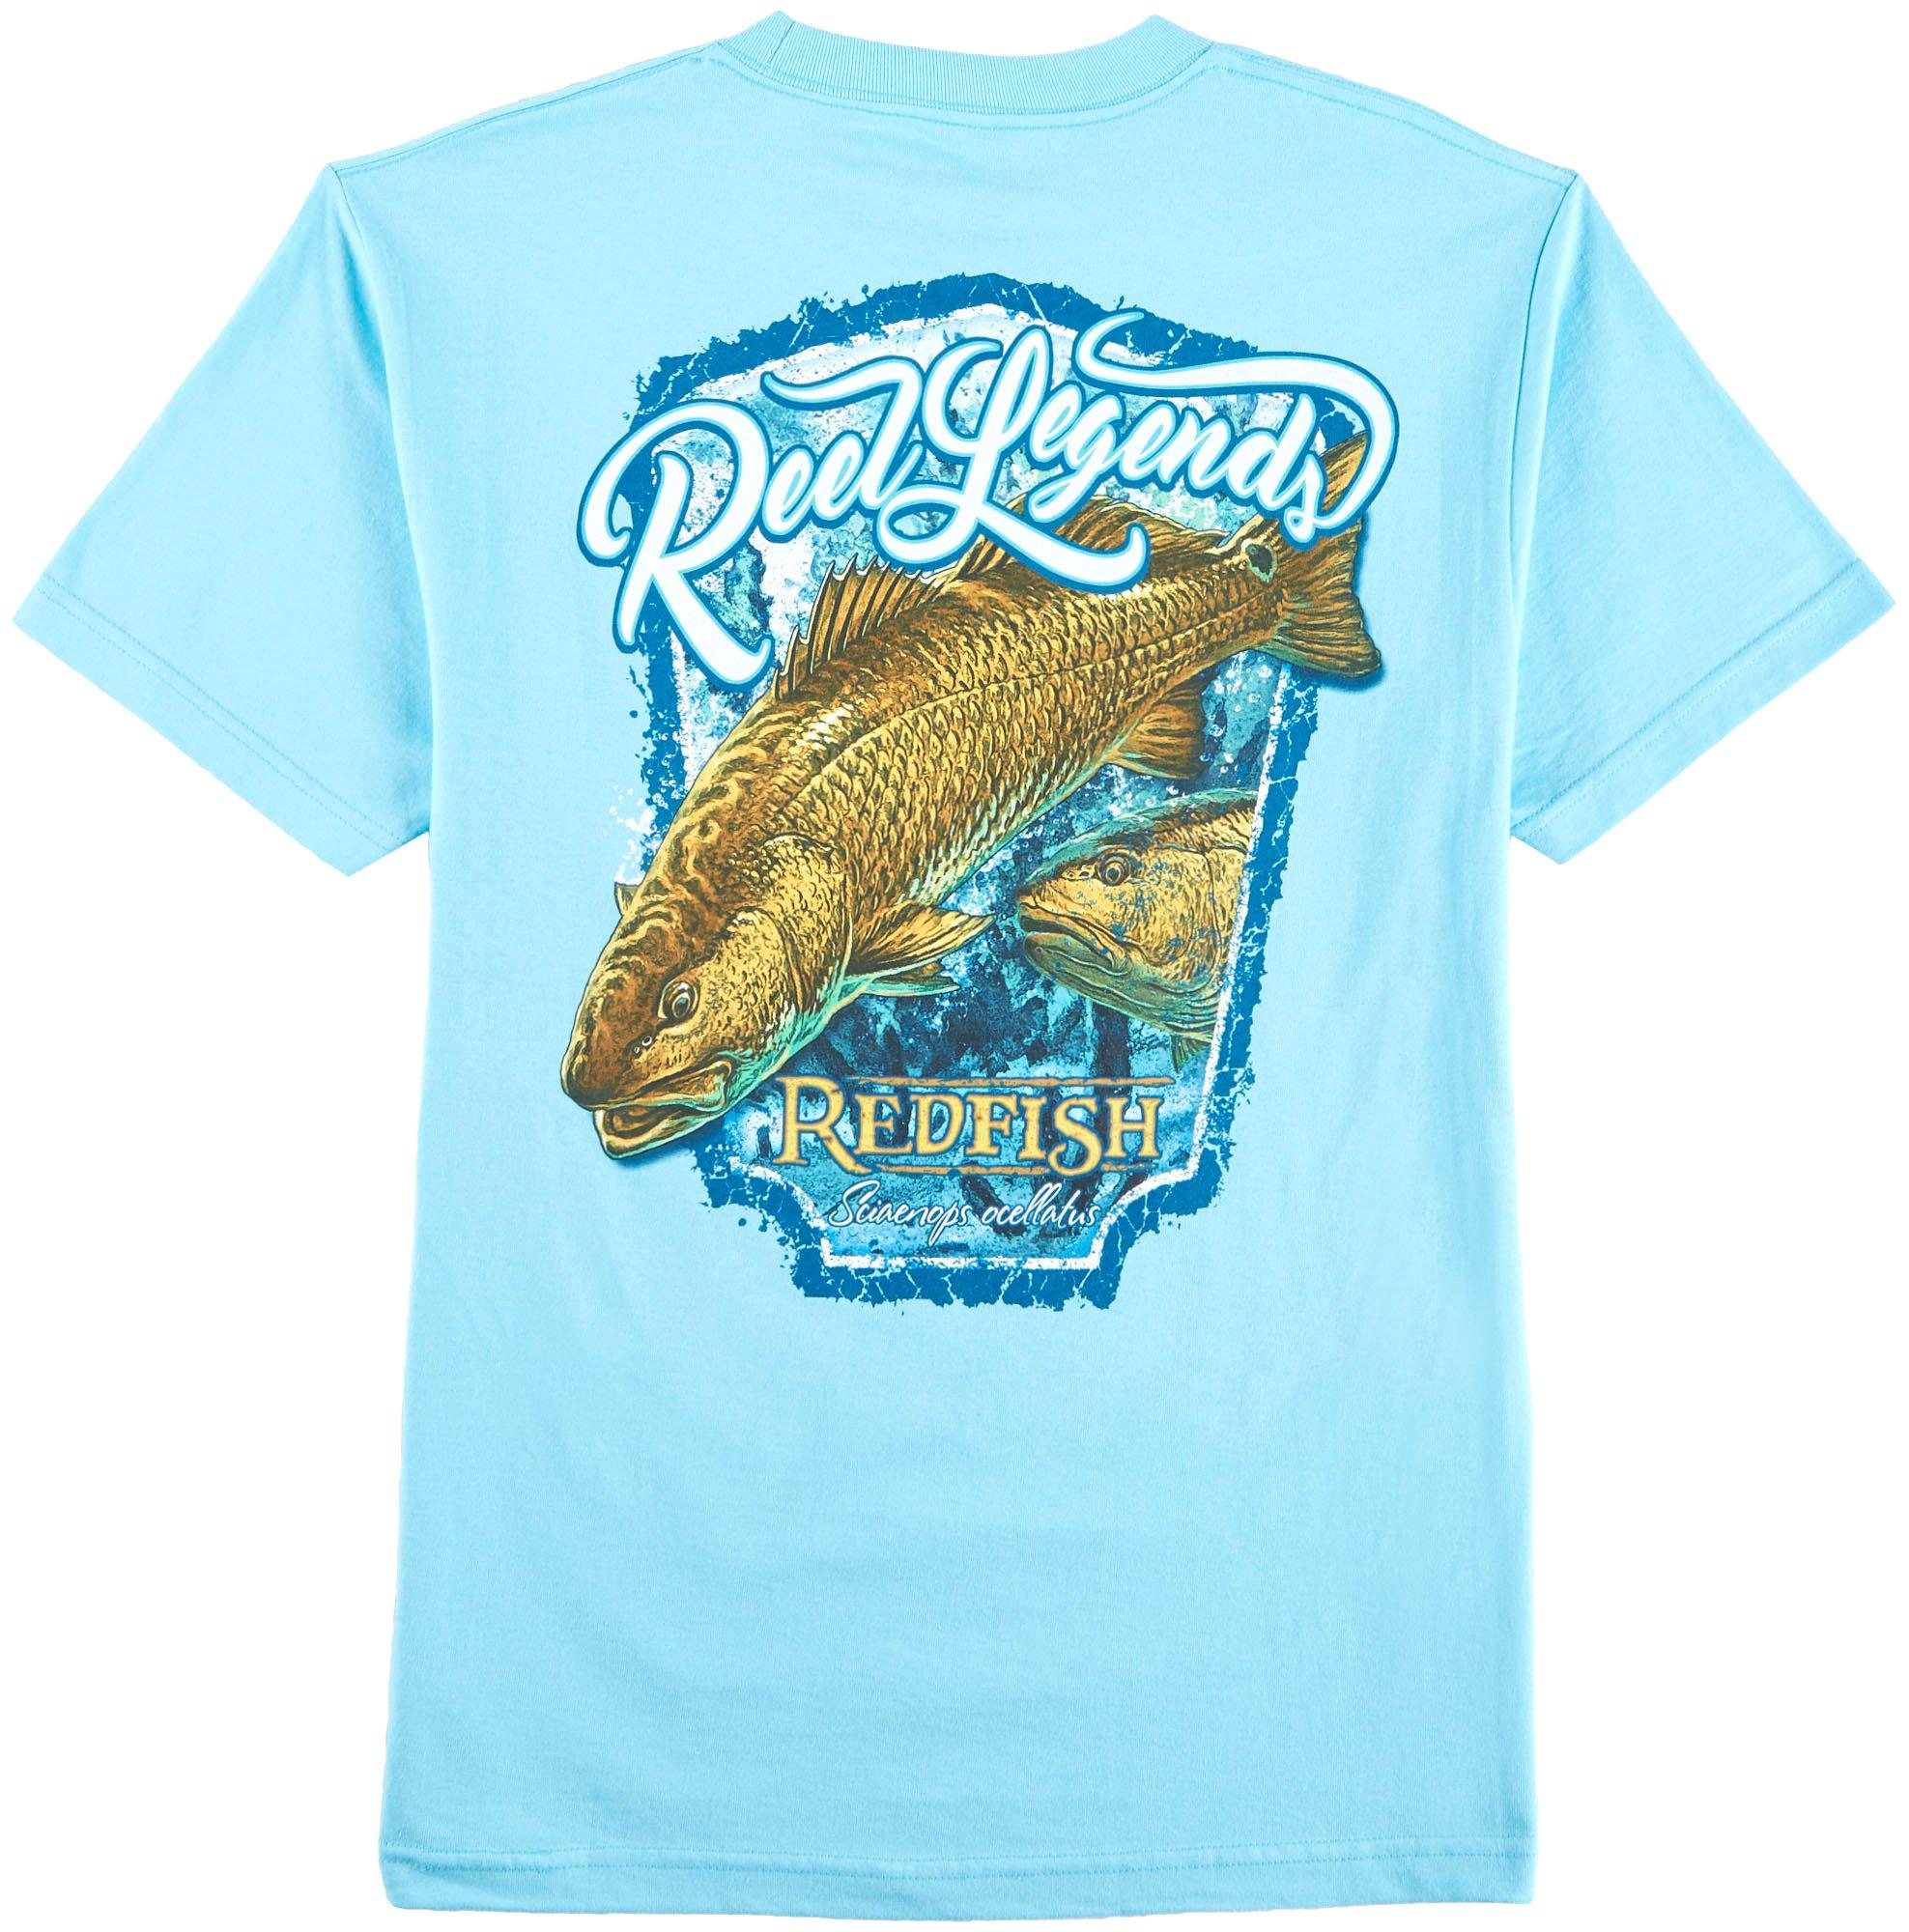 Reel Legends Mens Redfish Crew T-Shirt